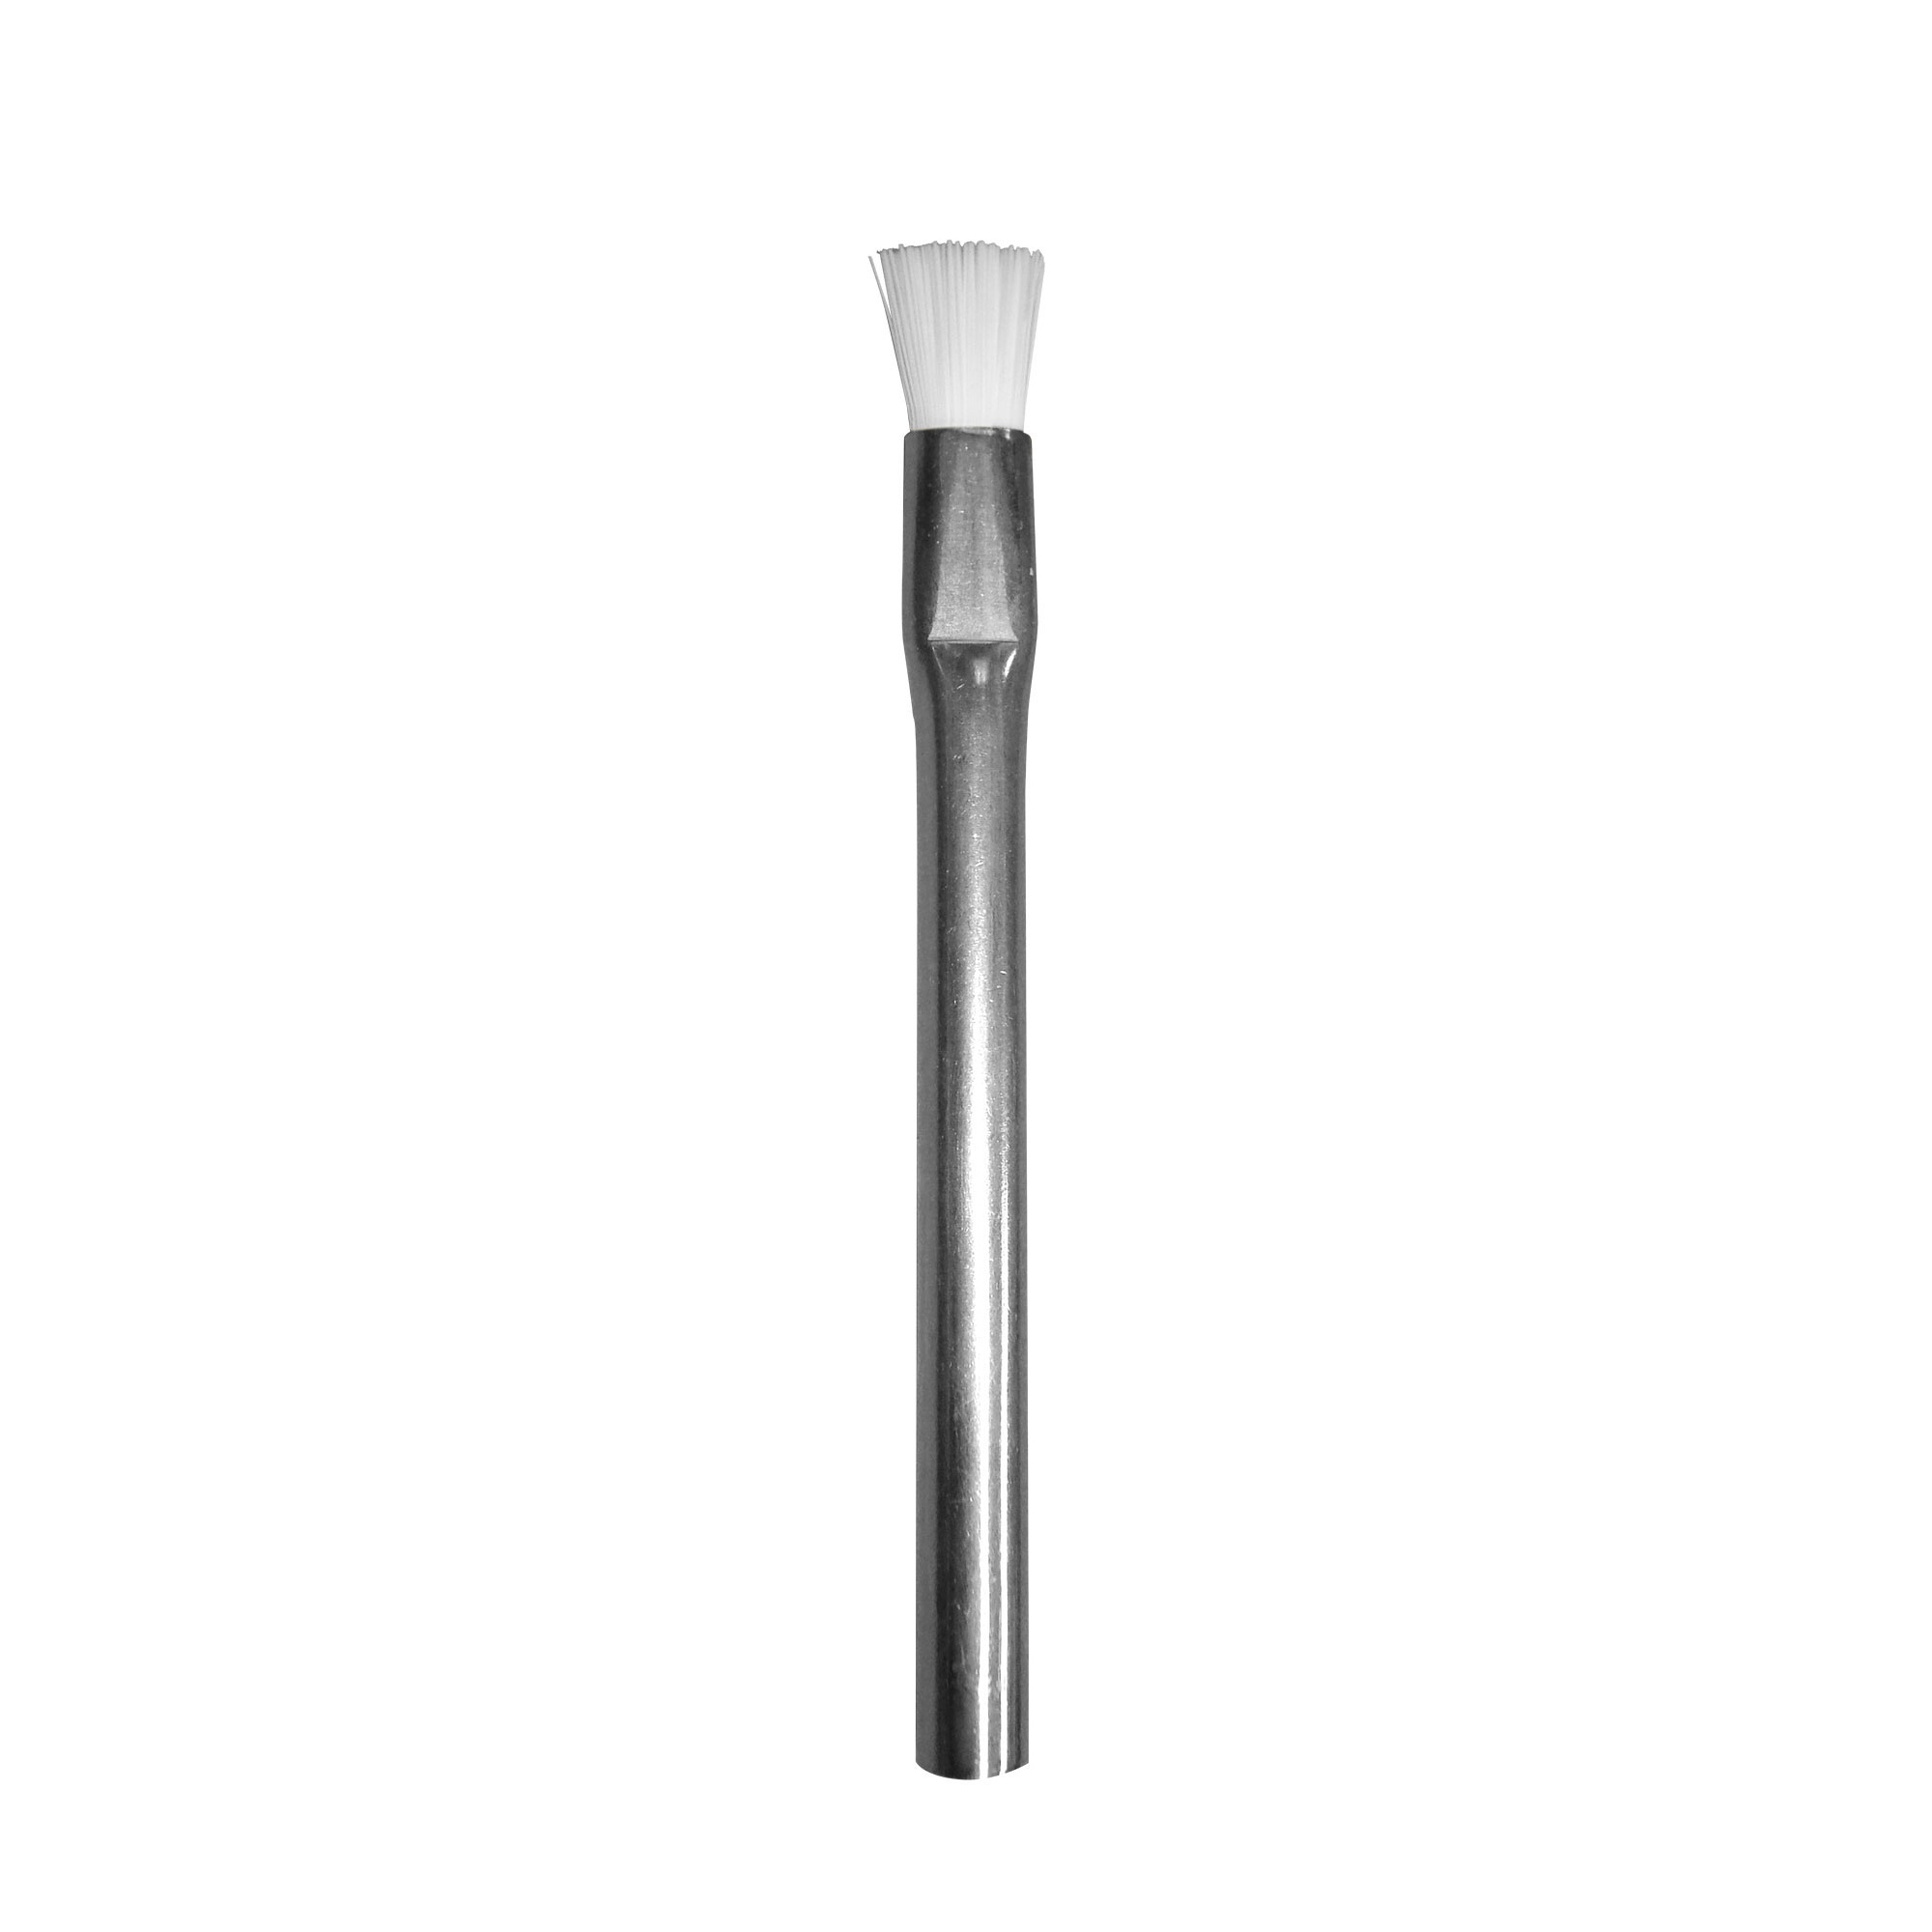 Applicator Brush — 0.006" PEEK Bristle / 5/16" Diameter Stainless Steel Tube Handle